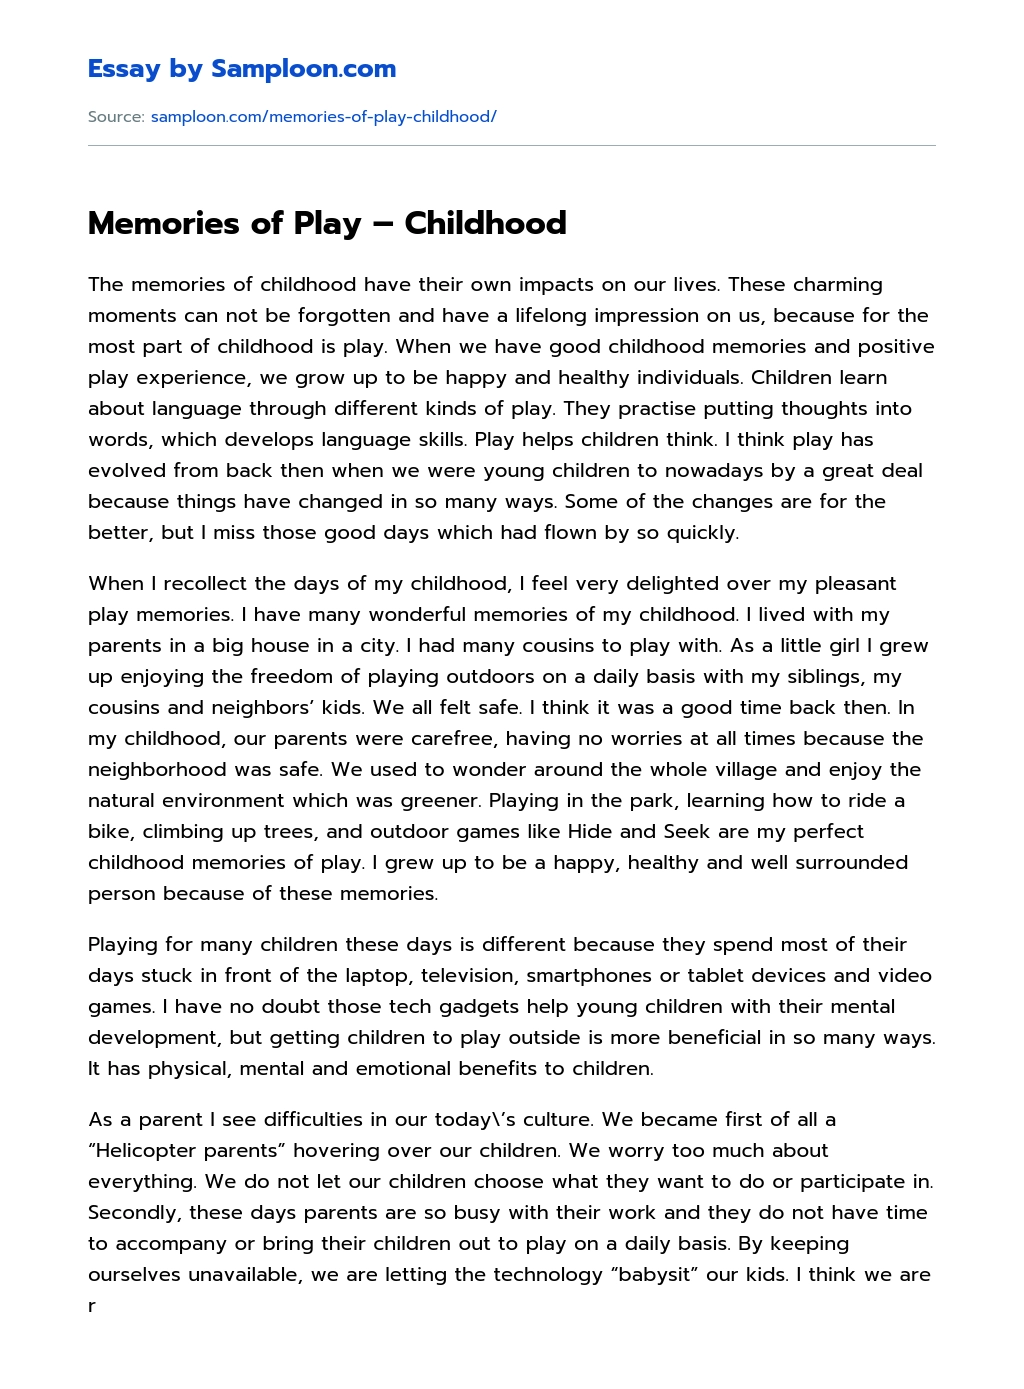 my childhood memories essay